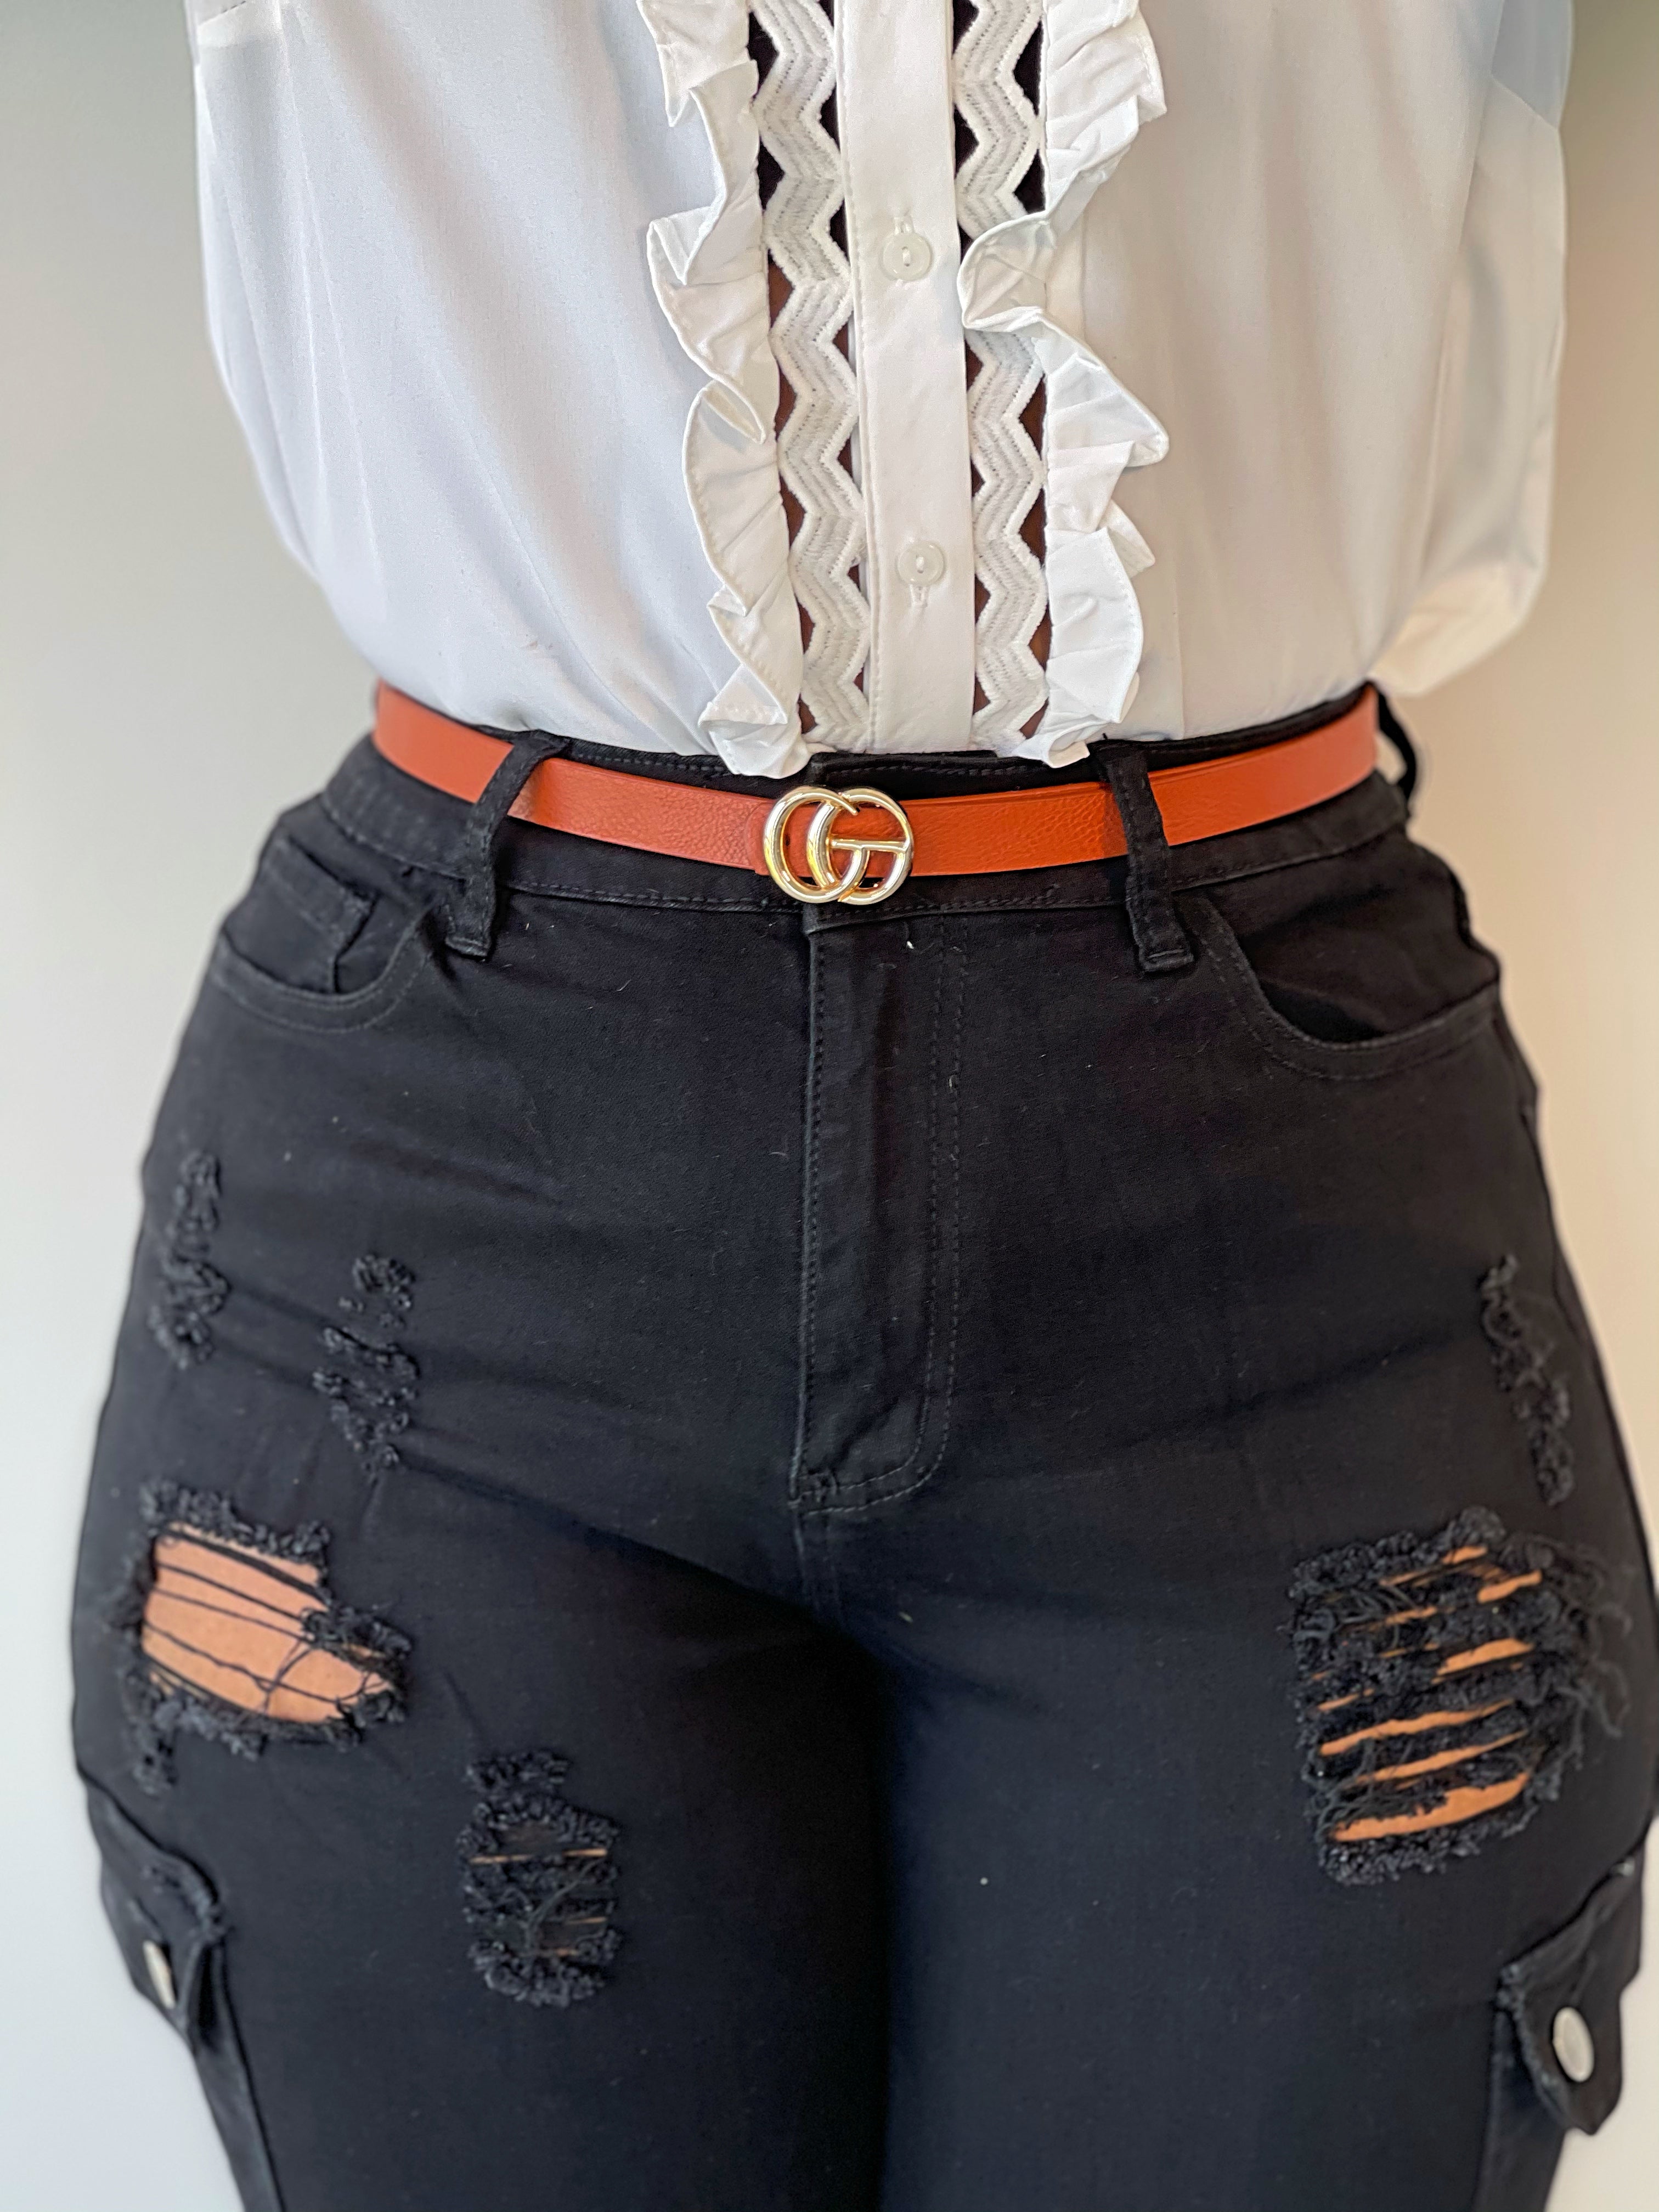 Mini GG Belt-Shiny Finish-Brown - Impoze Style™